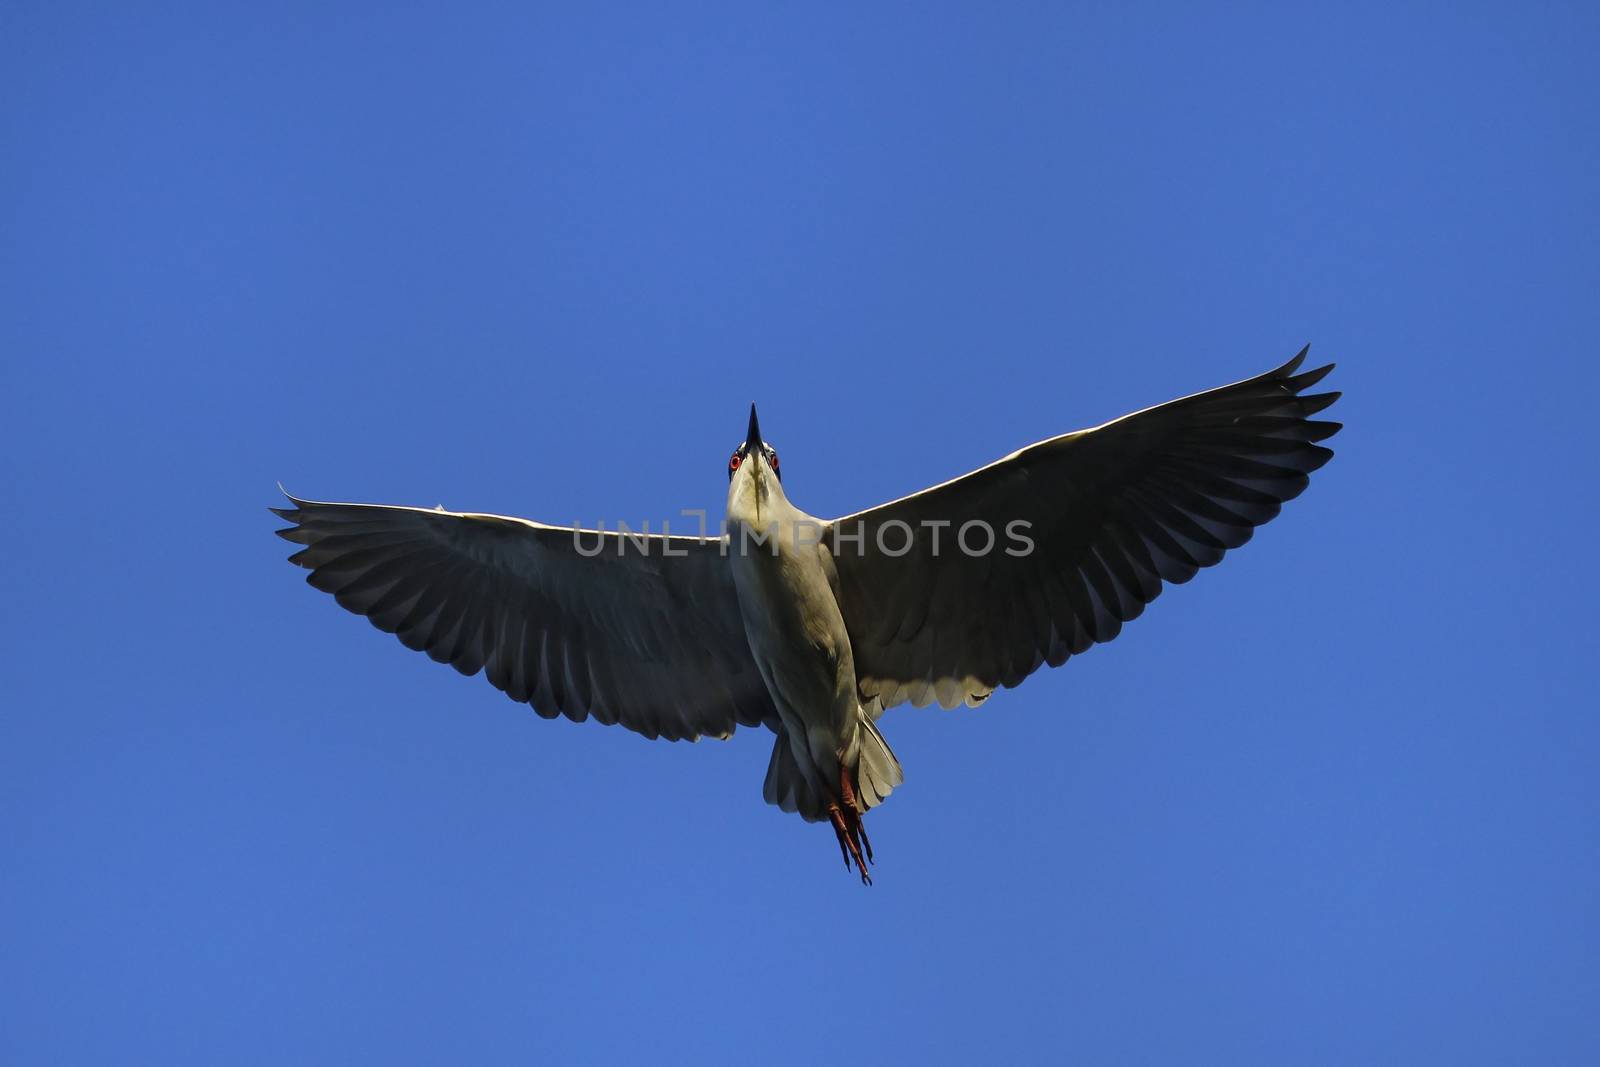 Black-crowned night heron flying in blue sky by donya_nedomam